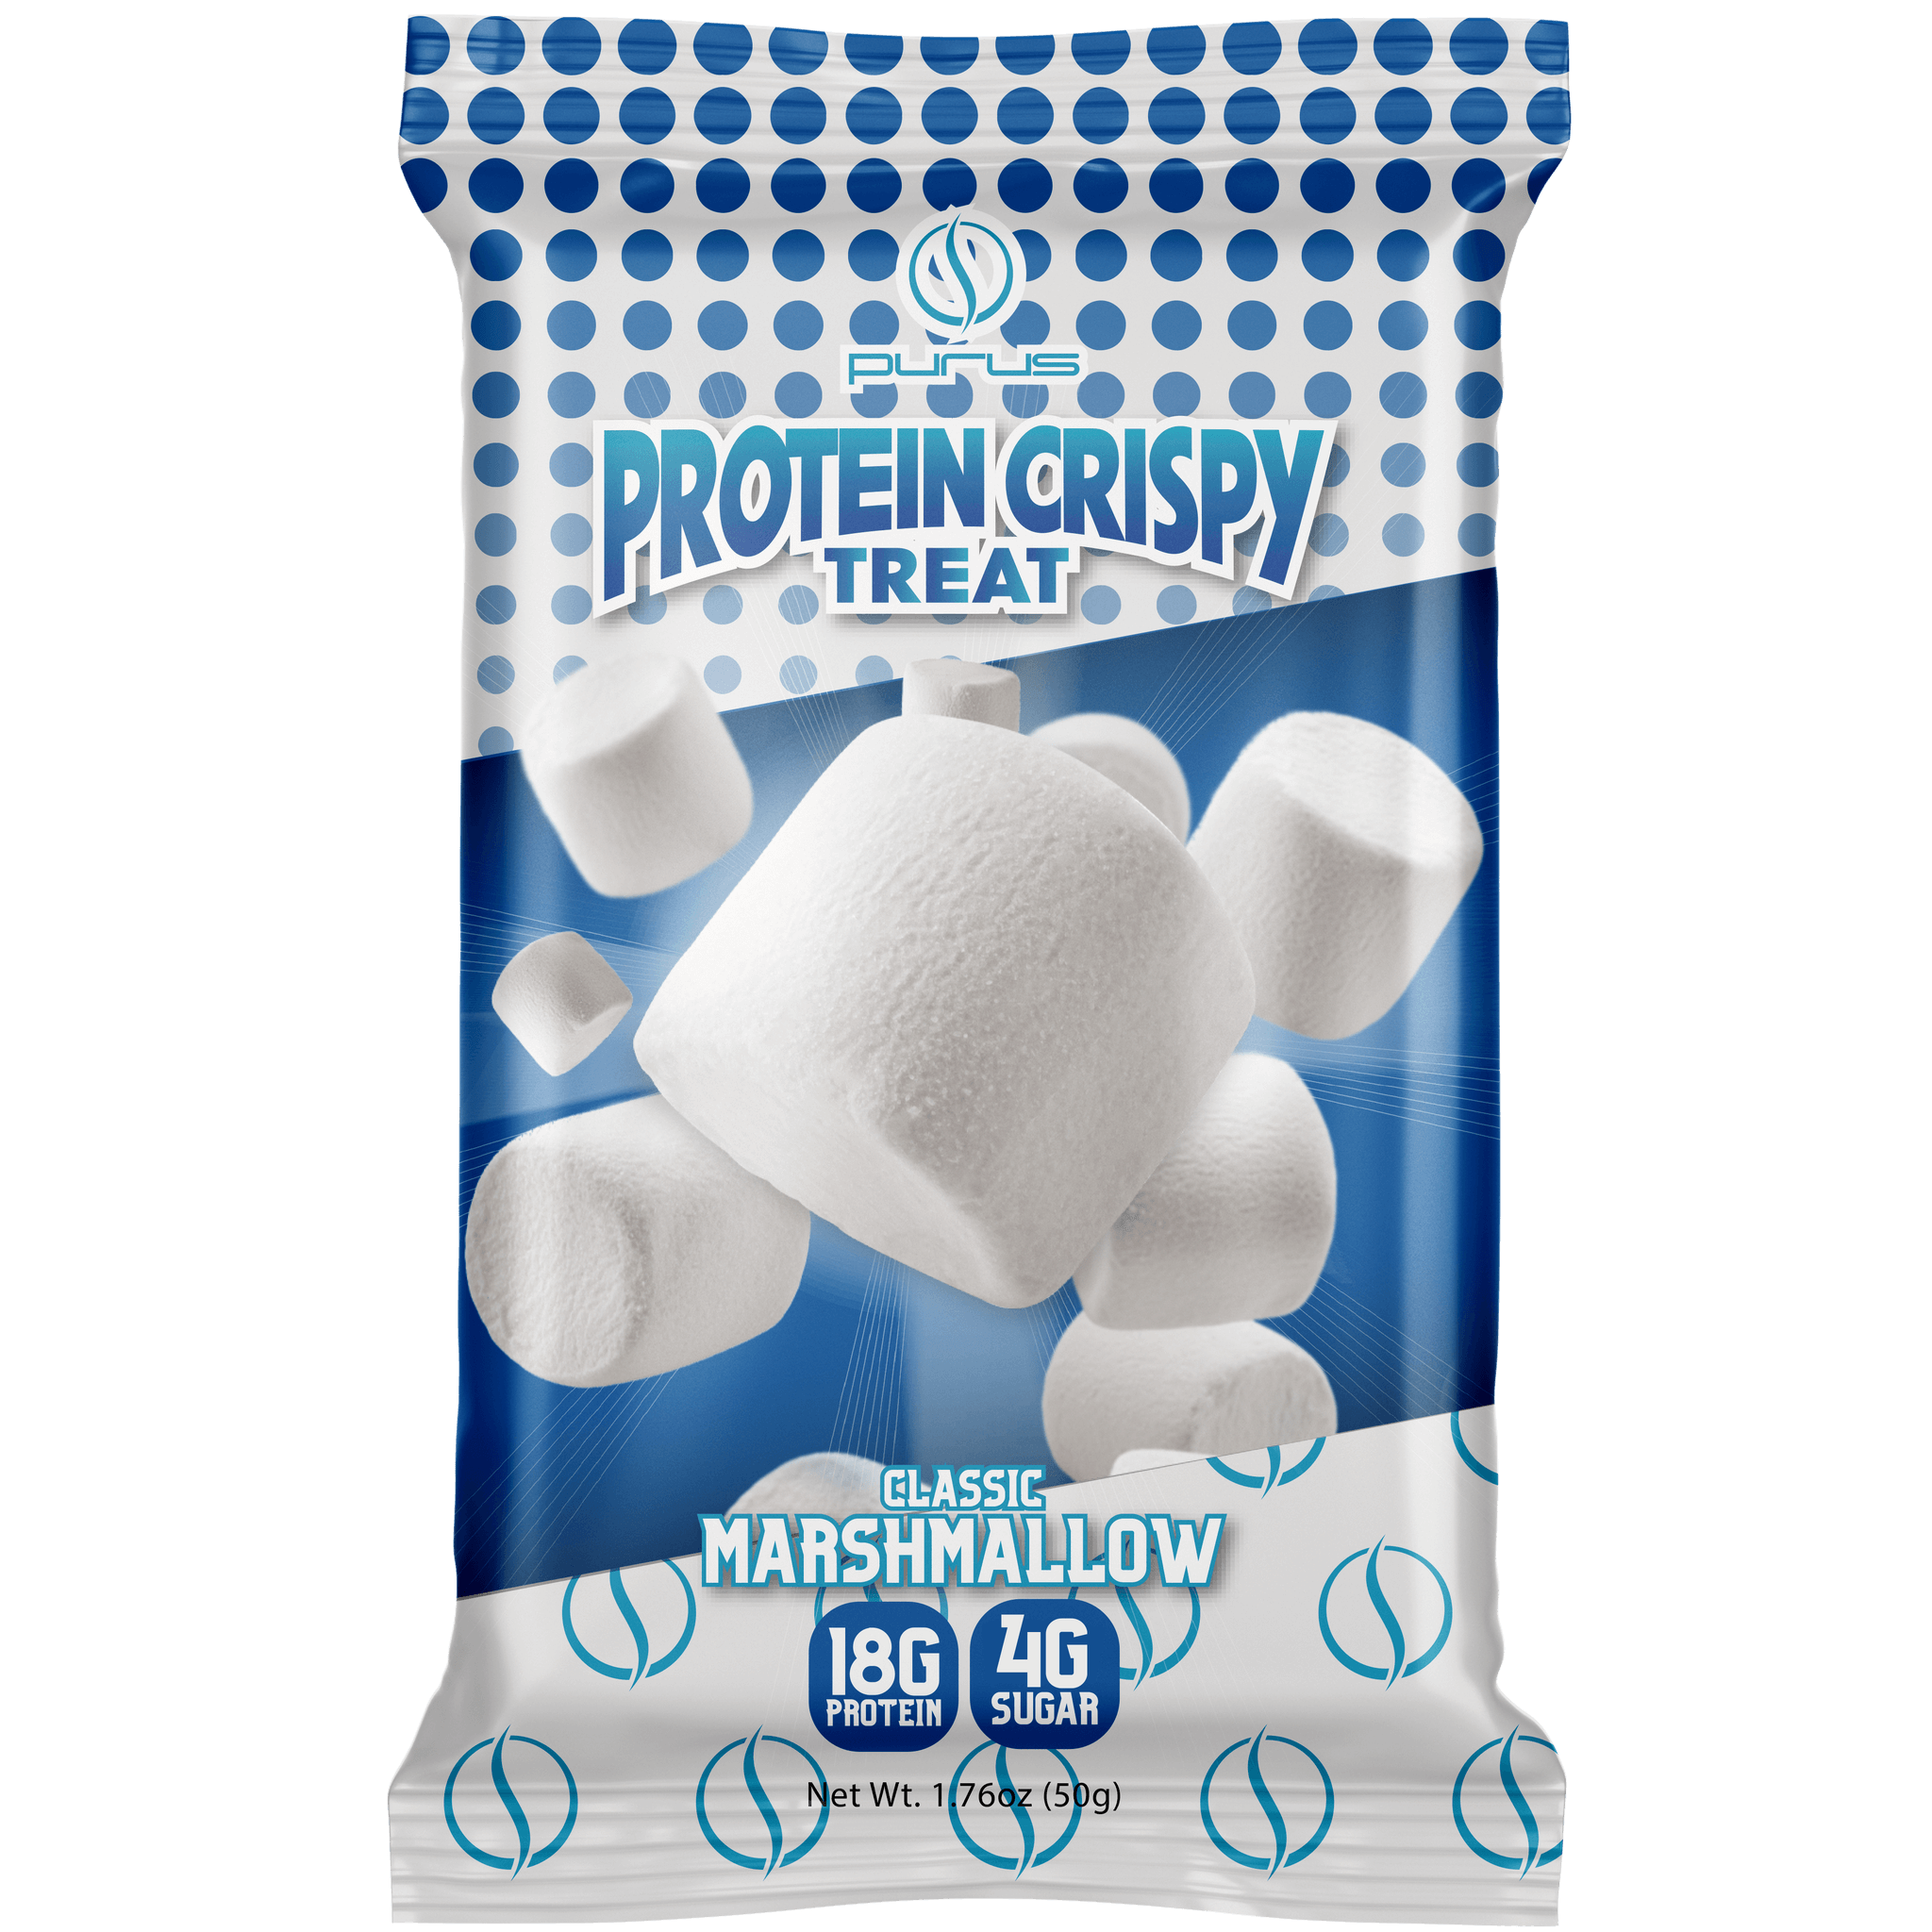 Purus Labs - Protein Crispy Treat